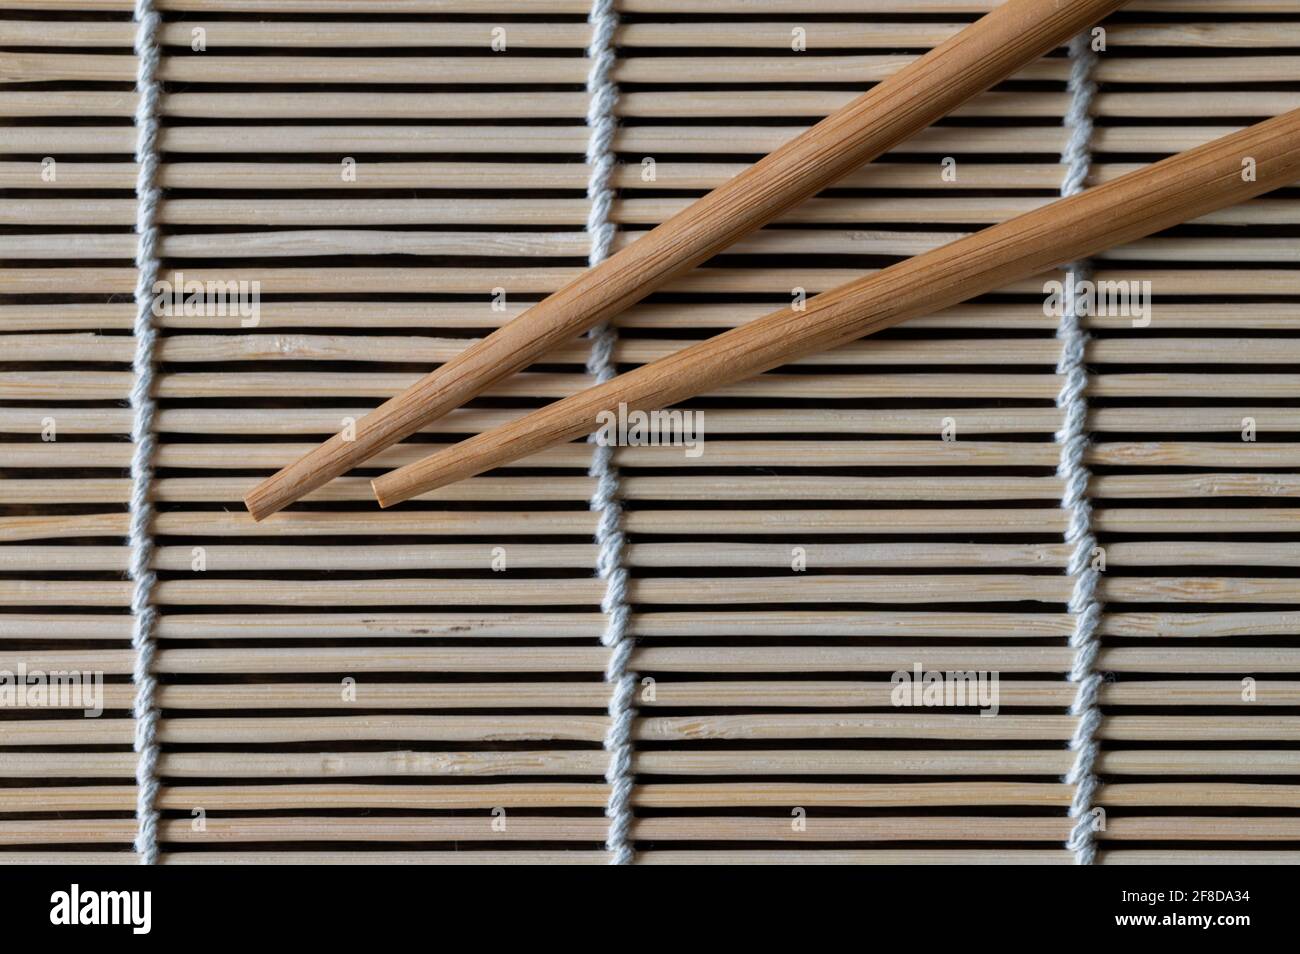 Top View of Chopsticks on a Bamboo Mat Stock Photo